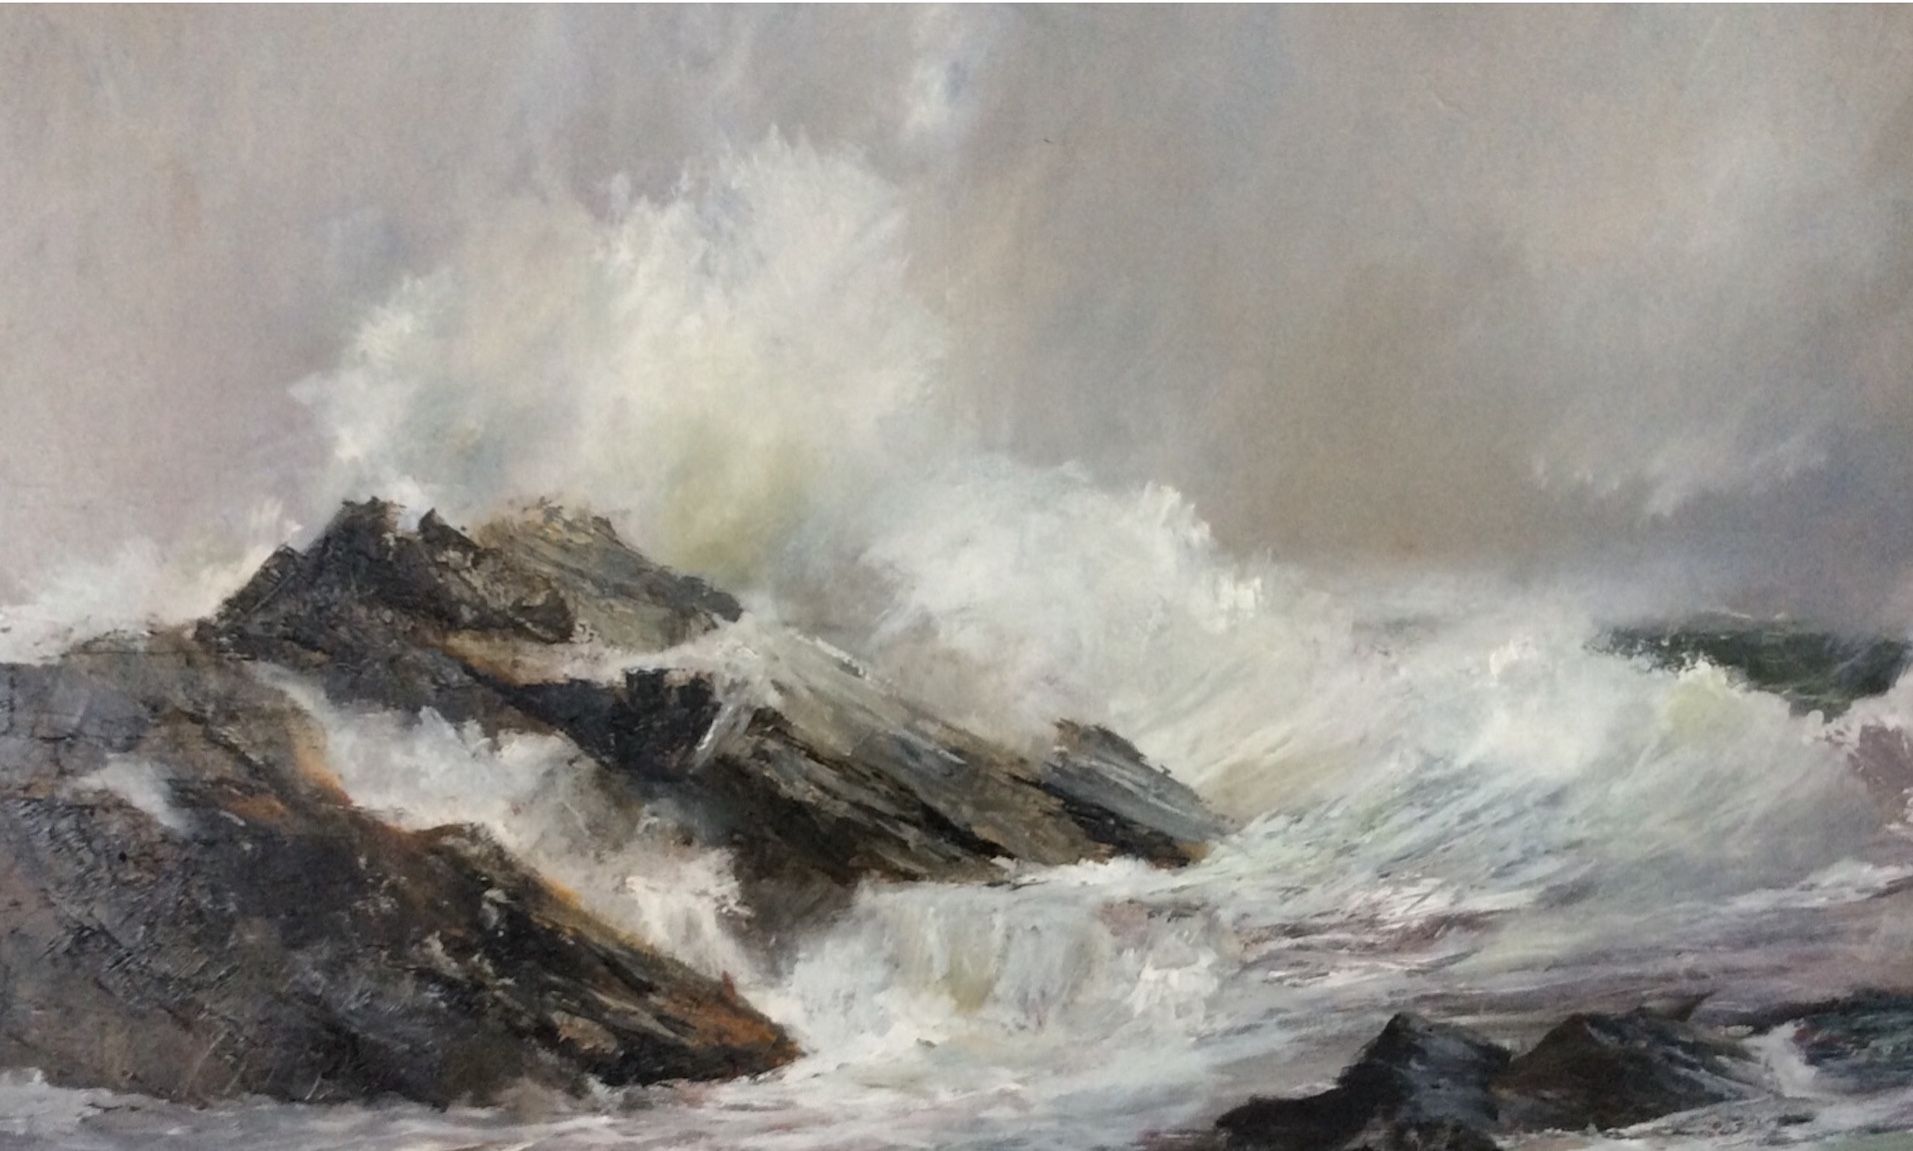 Hebridean Wave Surge by Kim Pragnell